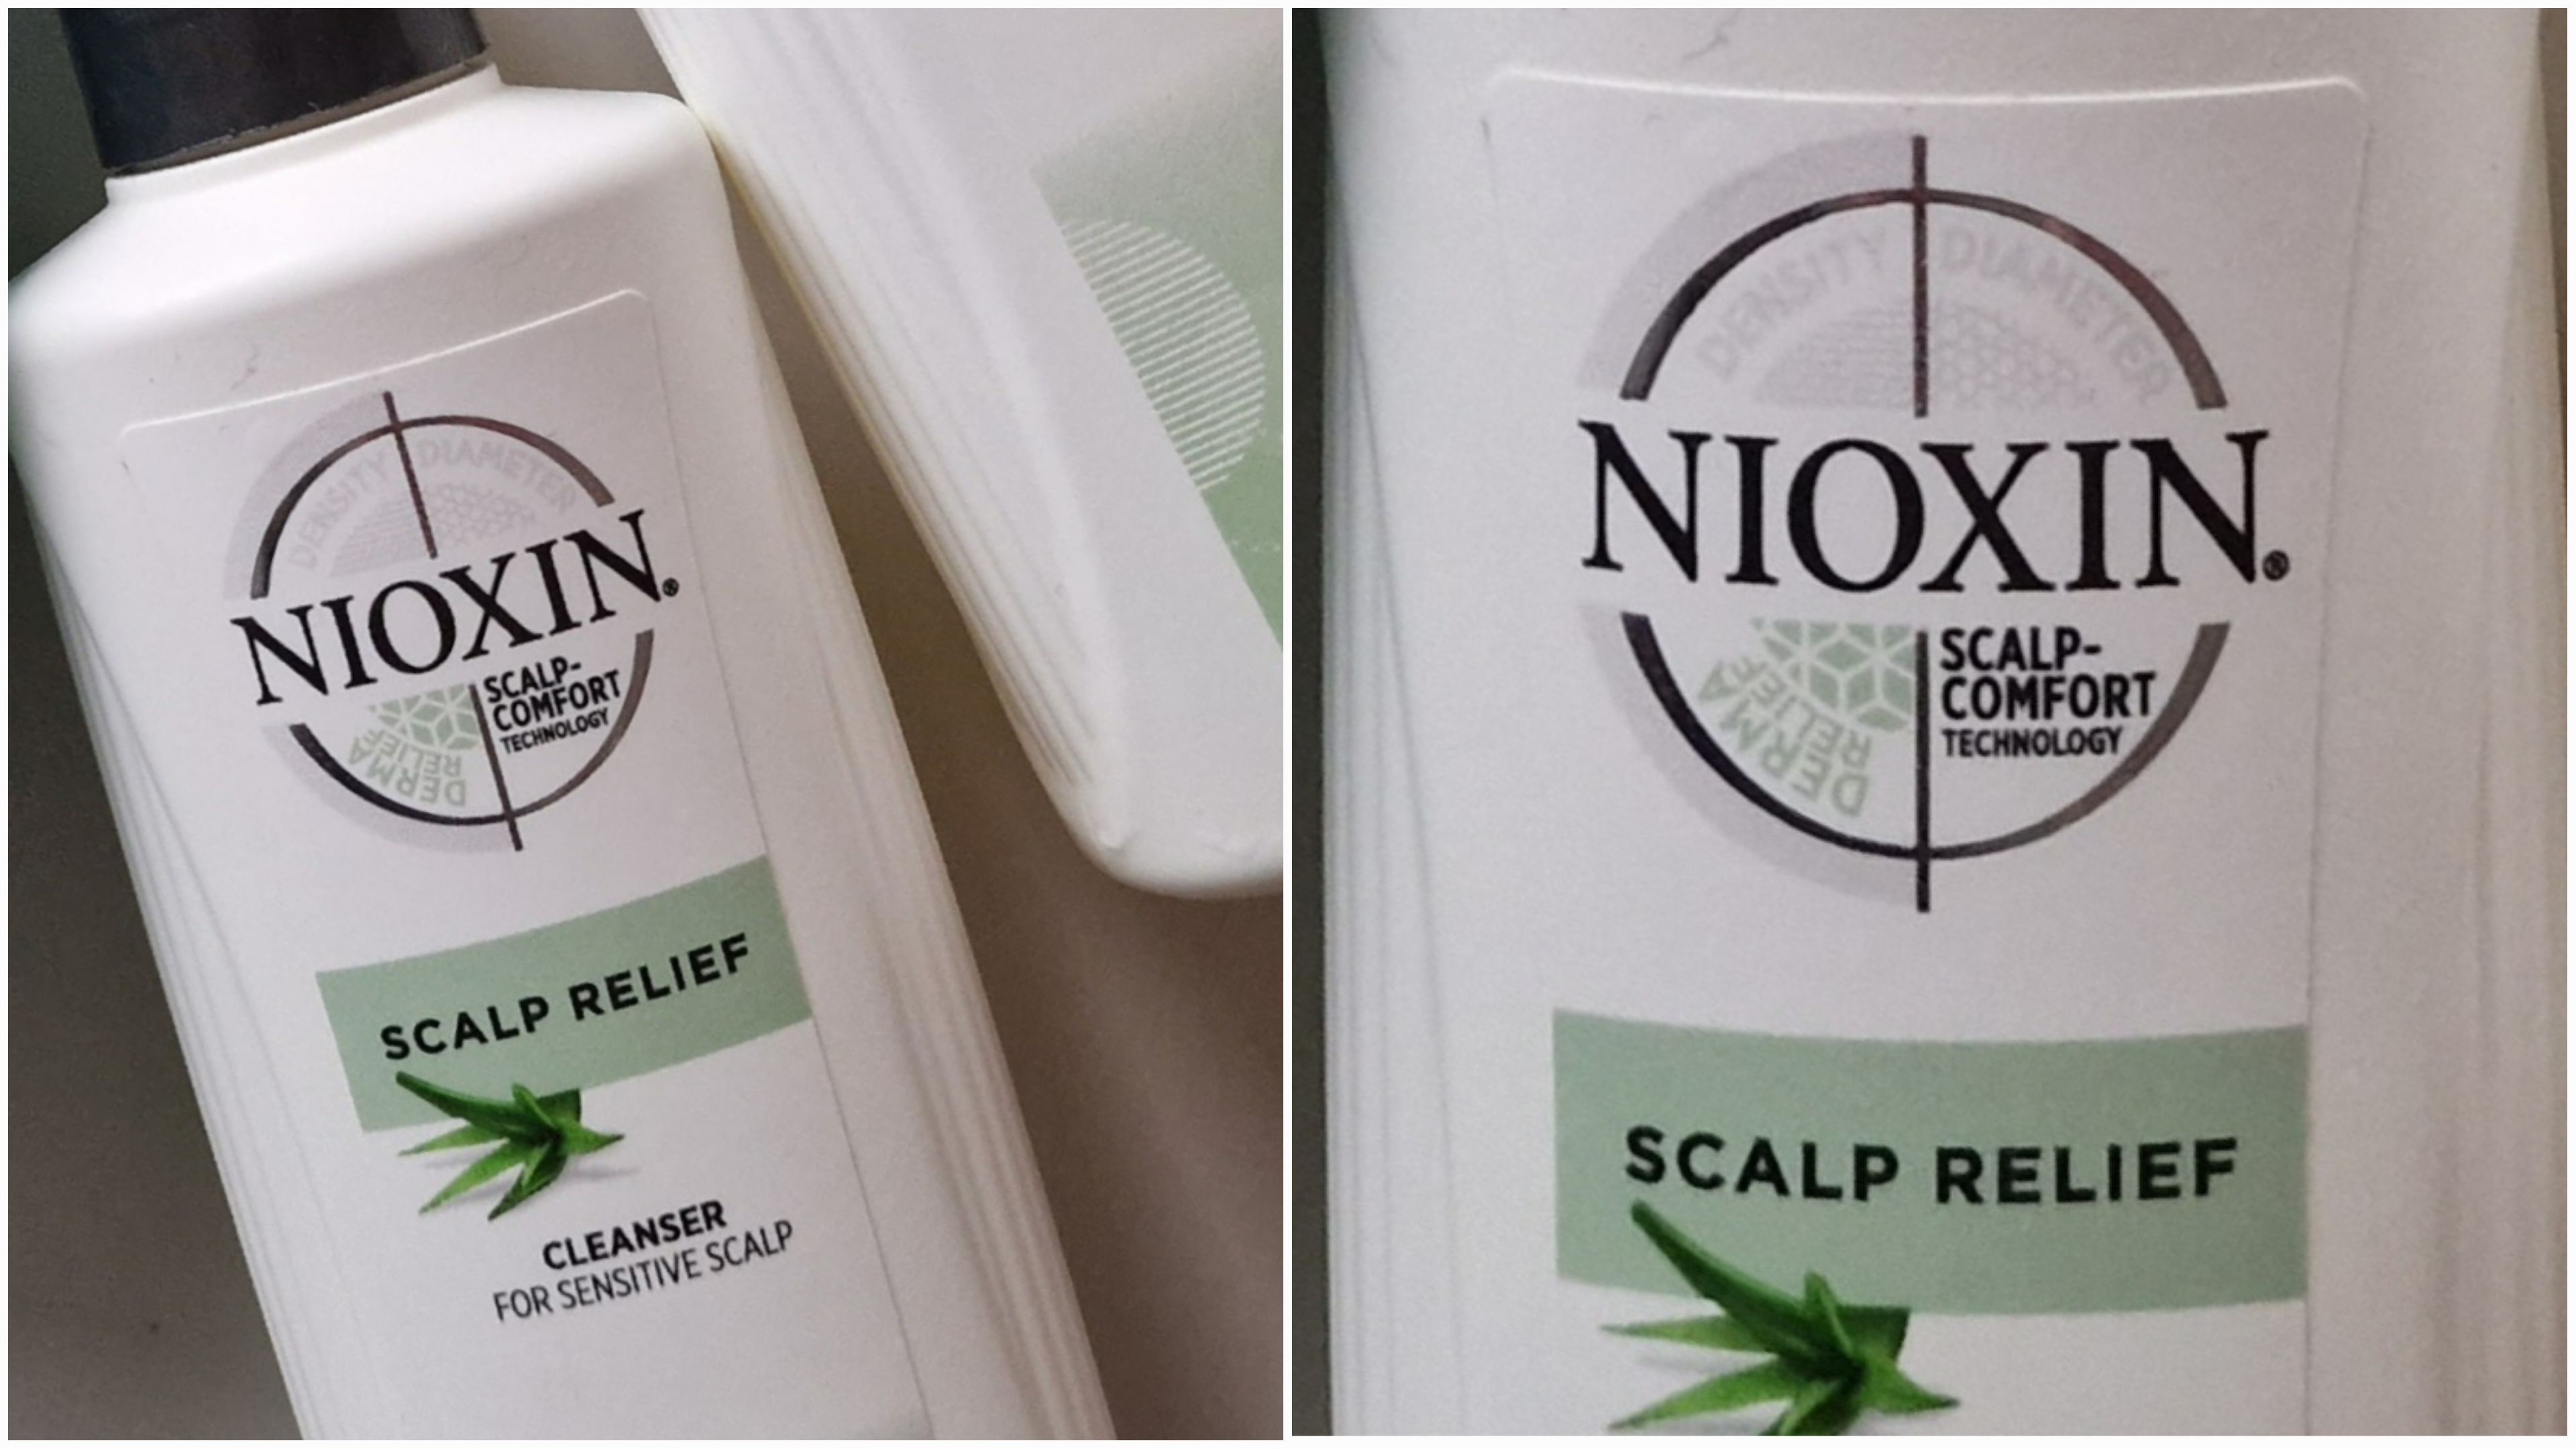 NIOXIN Scalp Relief Cleanser Shampoo